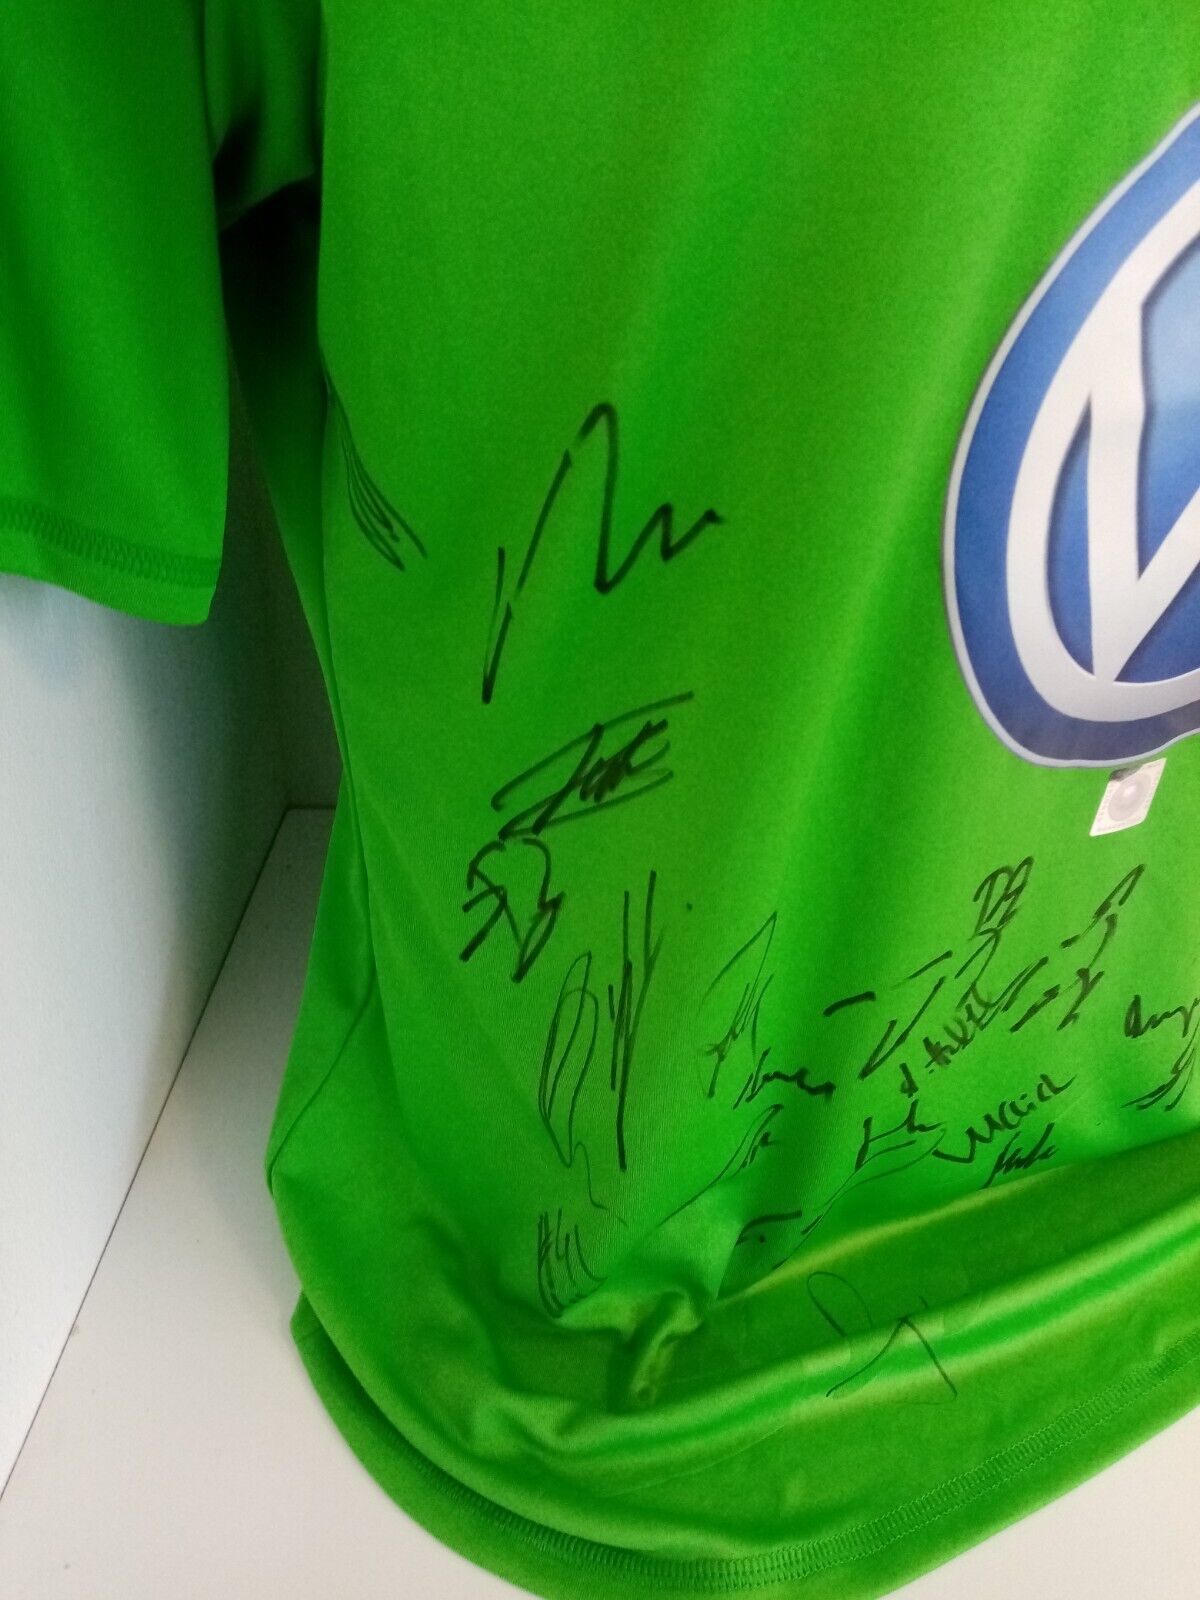 VFL Wolfsburg Trikot 2012/2013 Teamsigniert Wölfe Autogramm Fußball Adidas Neu L